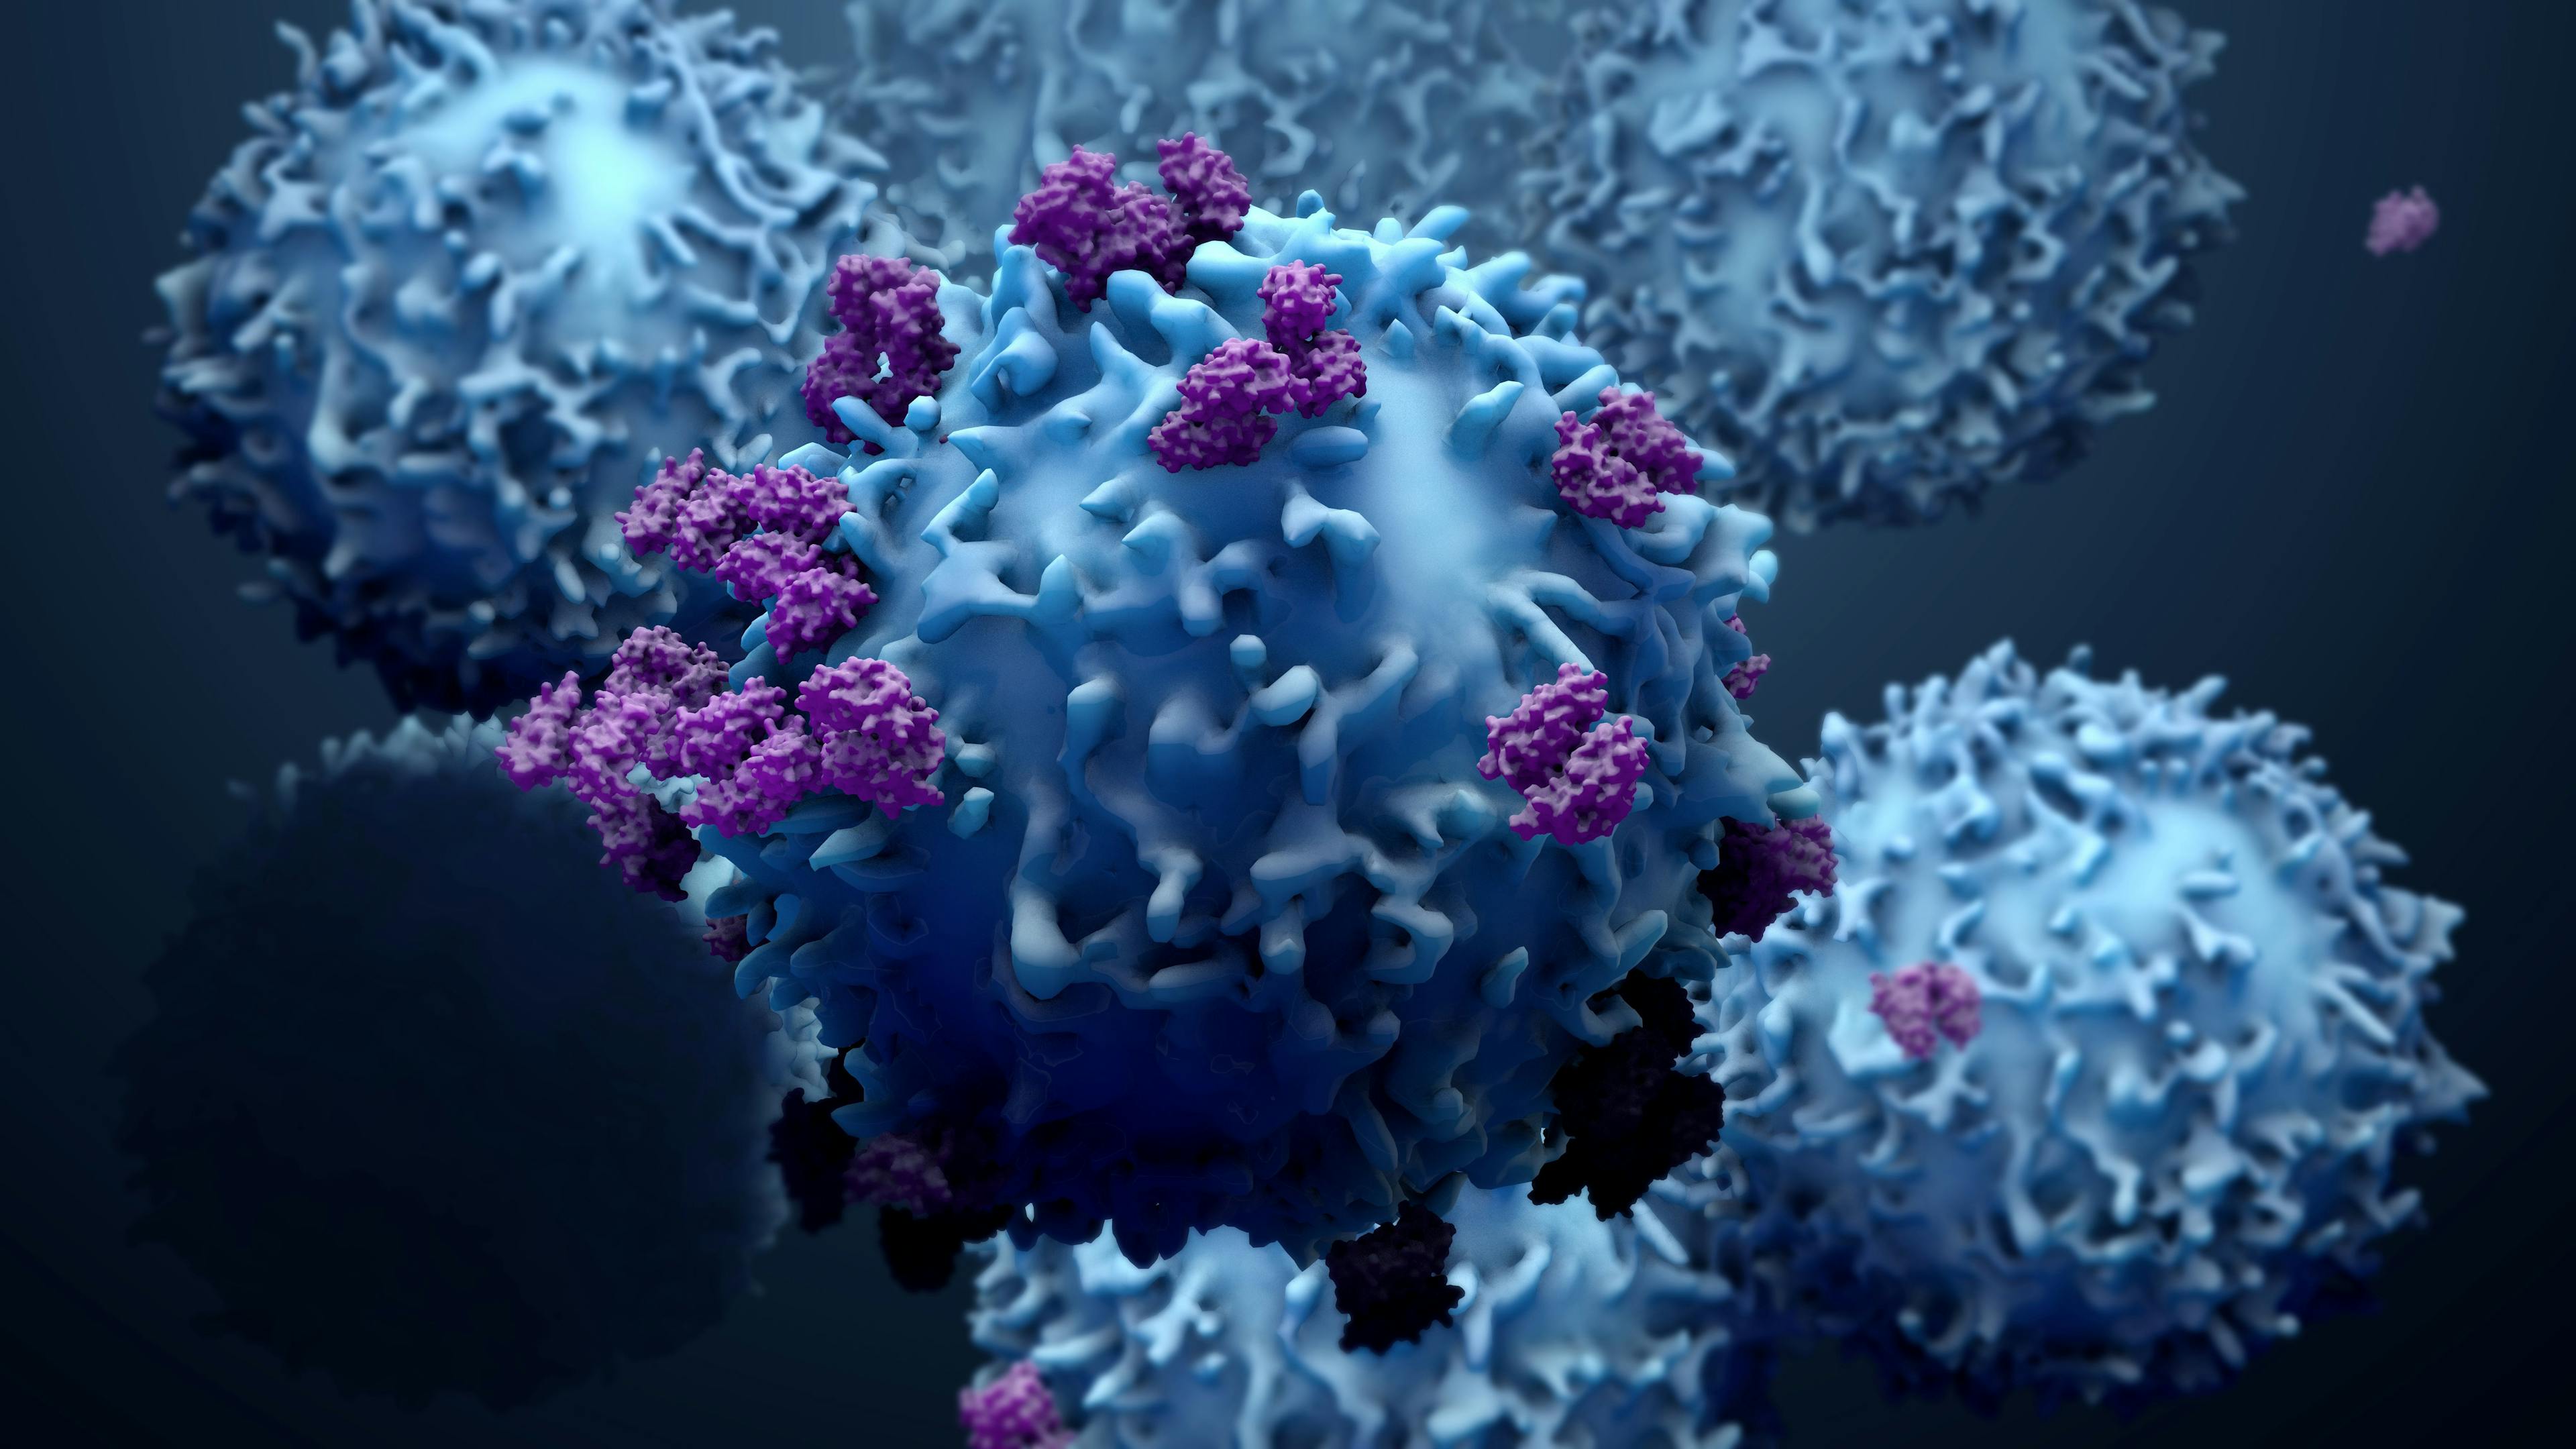 3d illustration proteins with lymphocytes t cells or cancer cells | Image Credit: Design Cells - stock.adobe.com